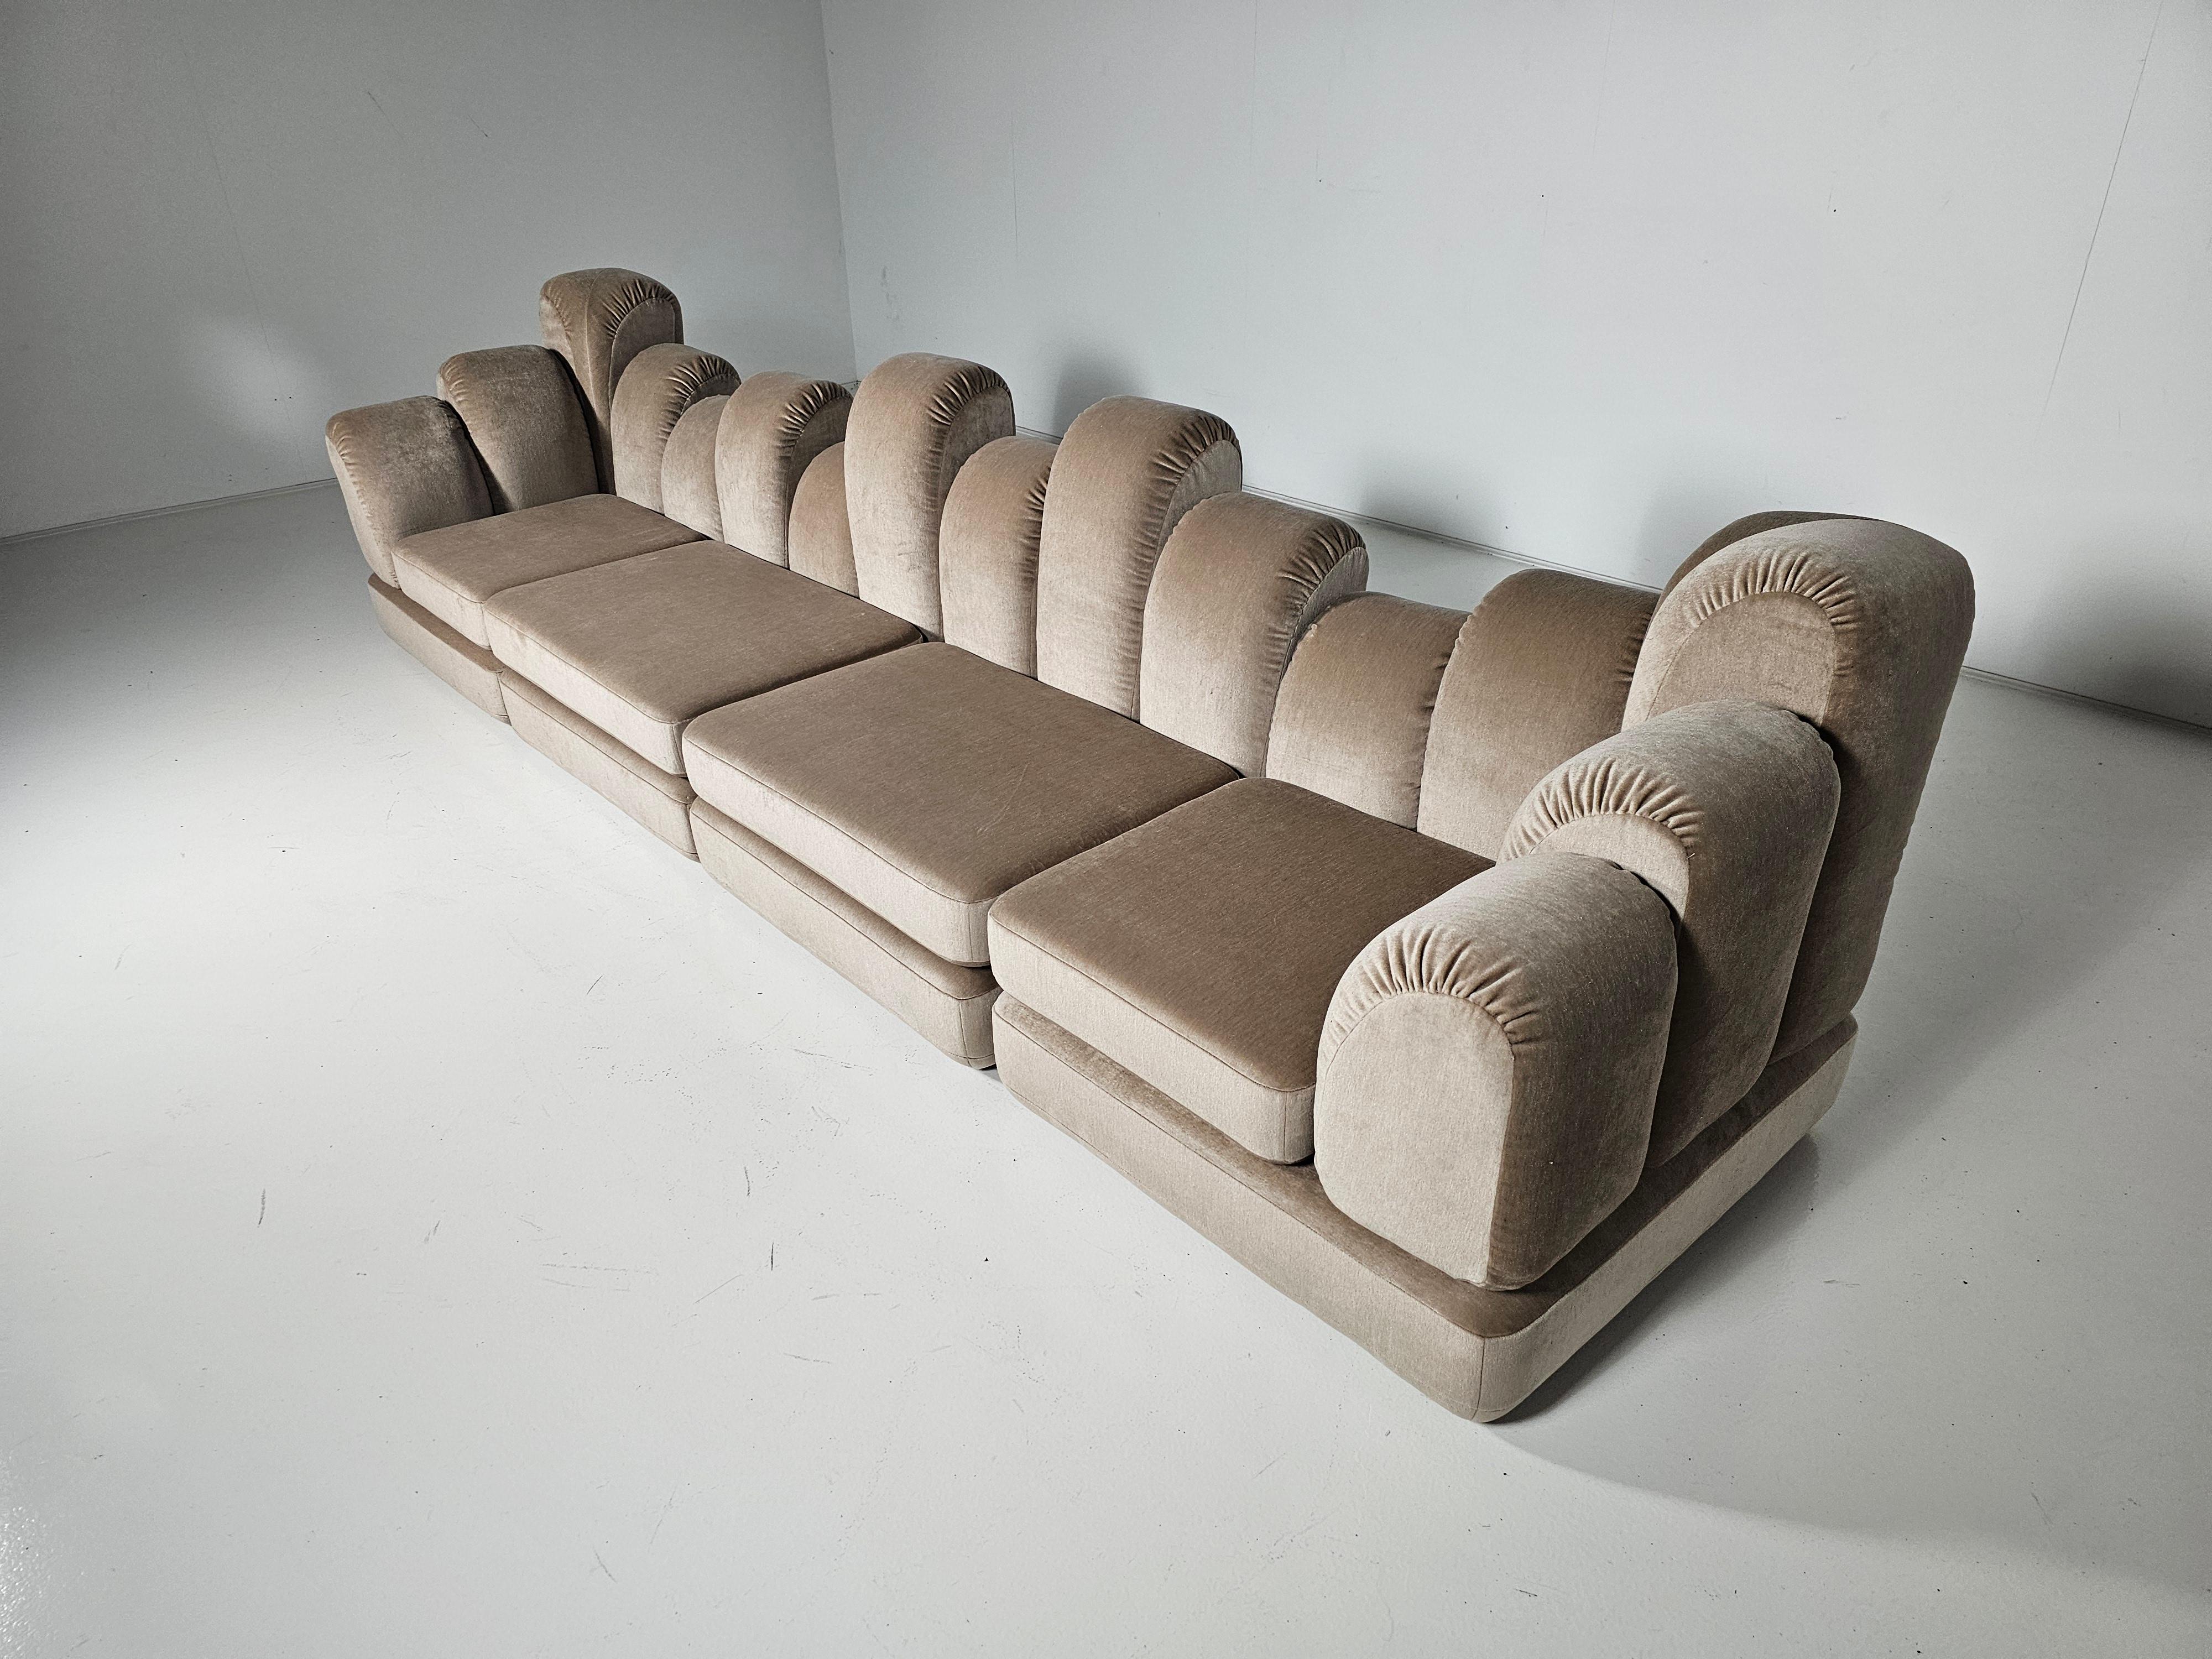 Hans Hopfer 'Dromadaire' Sectional Sofa in beige mohair velvet, Roche Bobois In Excellent Condition For Sale In amstelveen, NL